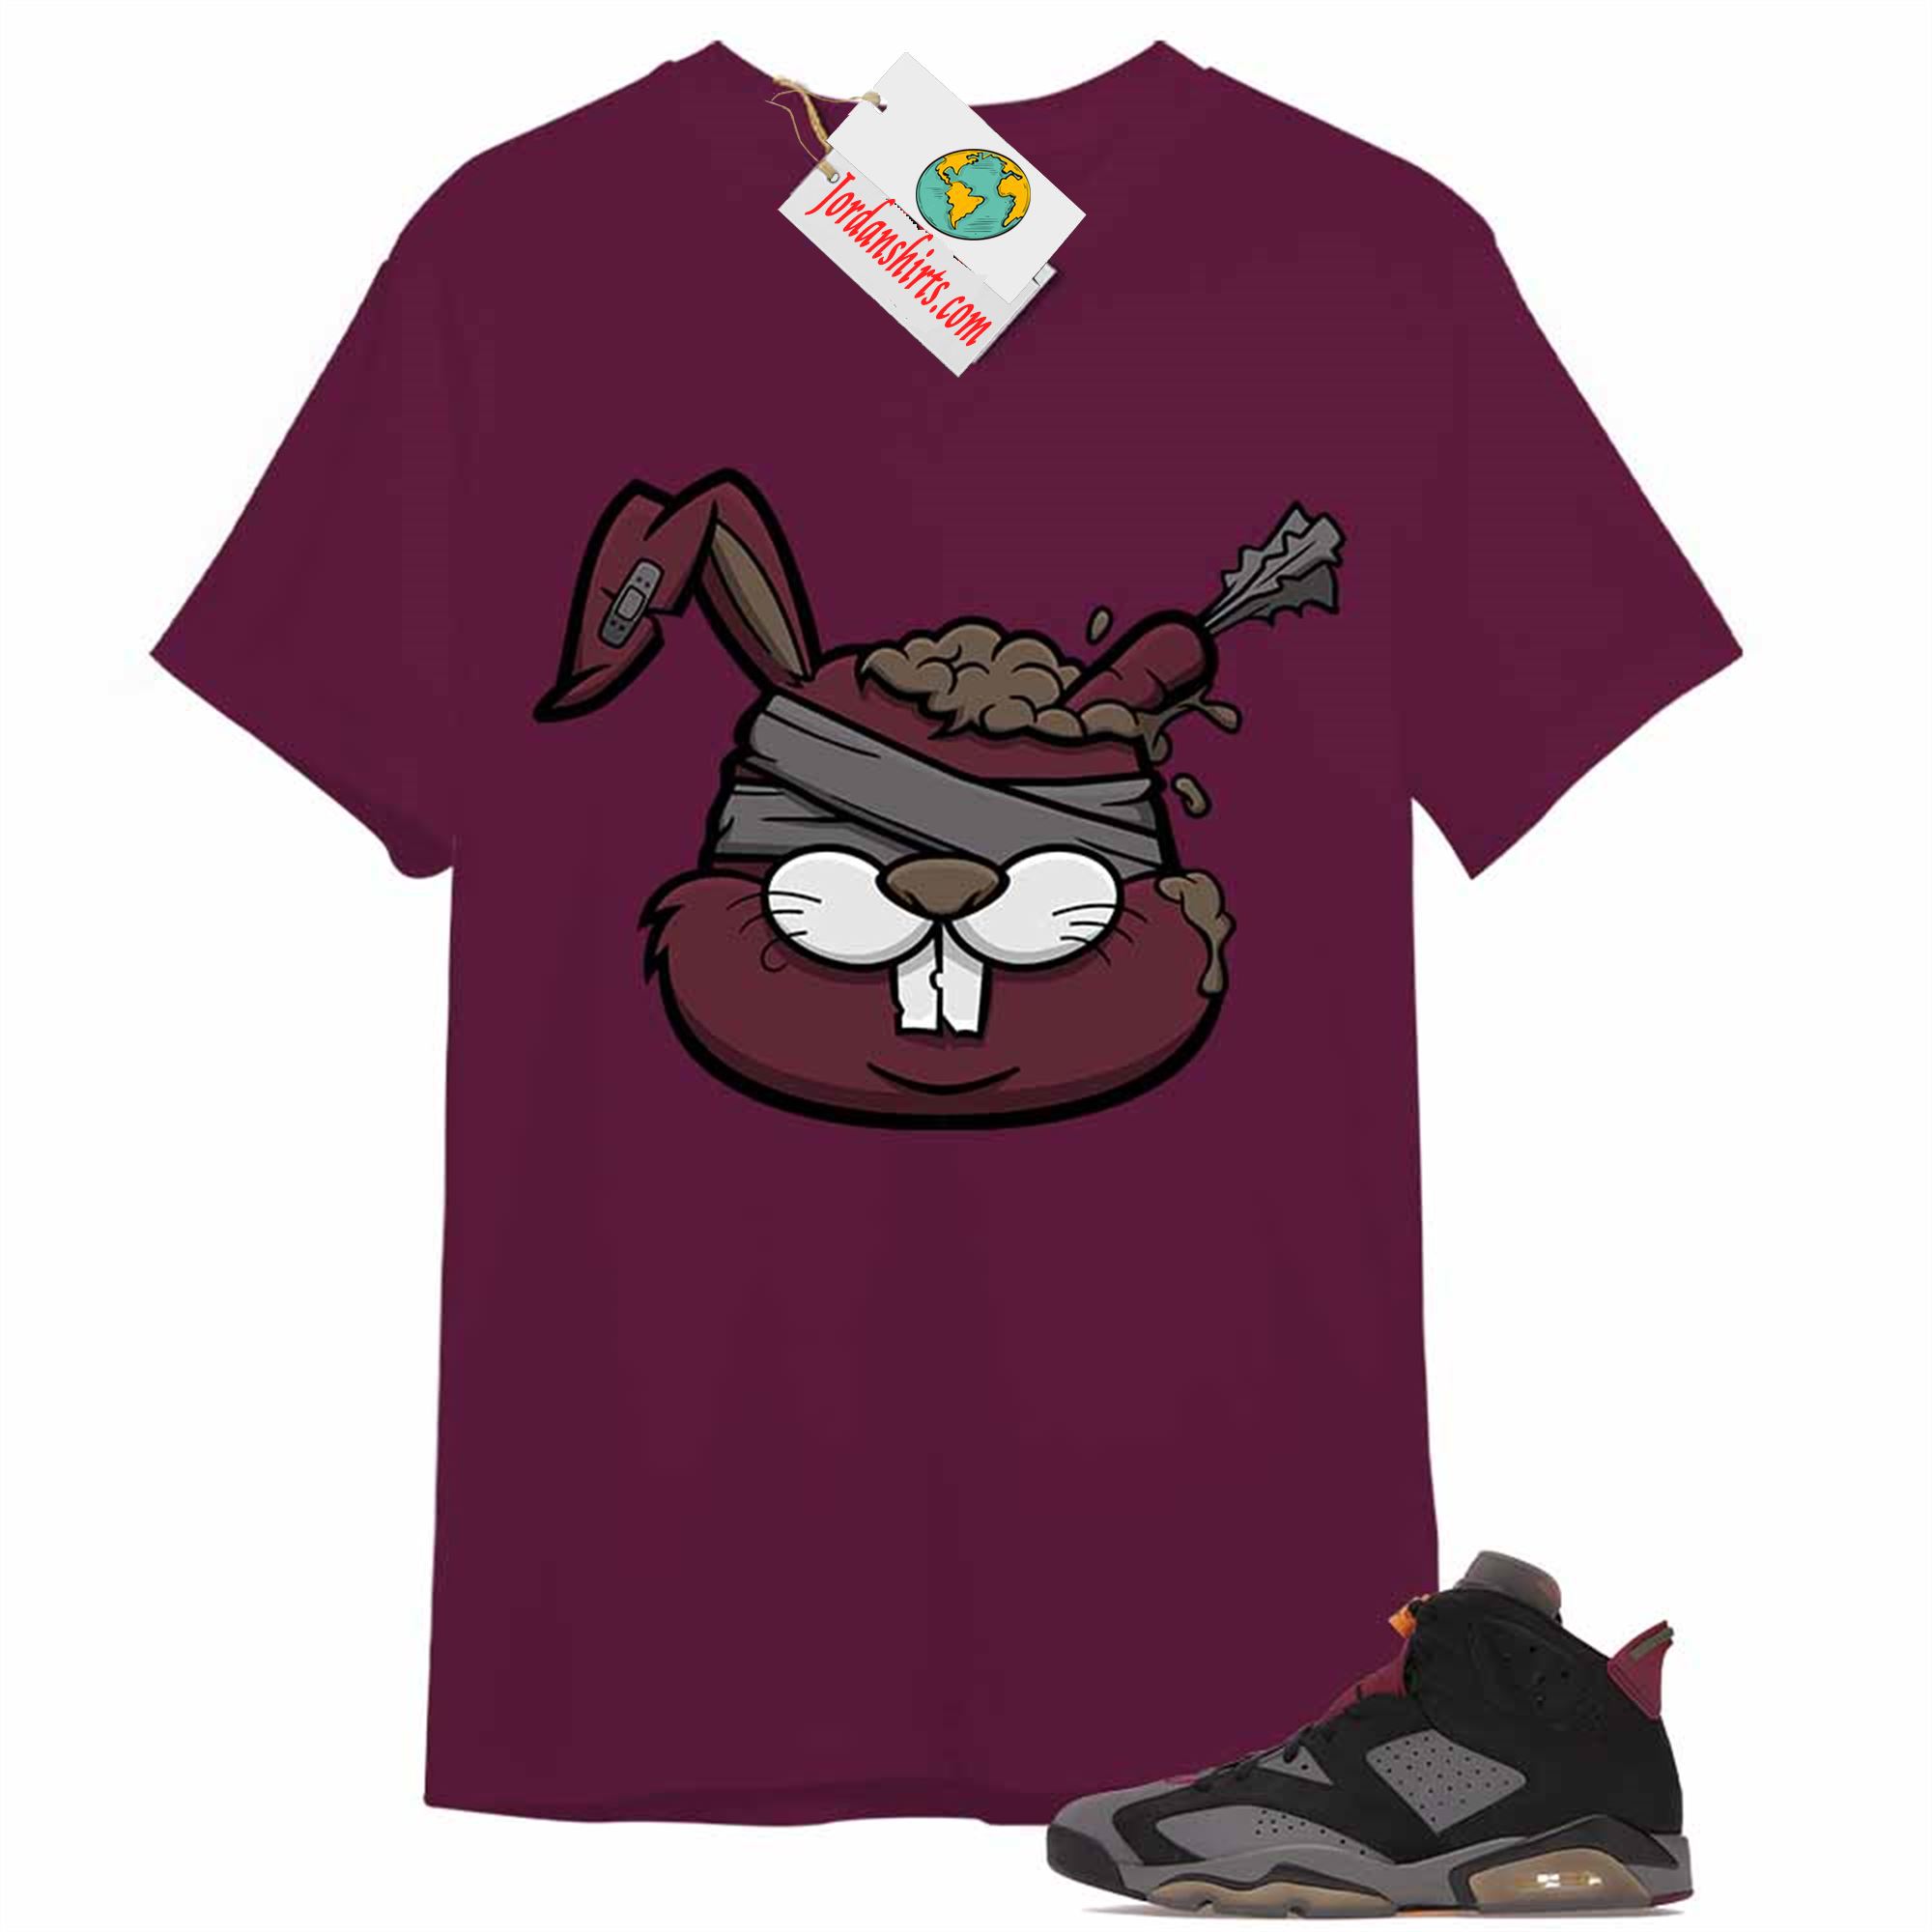 Jordan 6 Shirt, Zombie Bunny Maroon T-shirt Air Jordan 6 Bordeaux 6s Full Size Up To 5xl